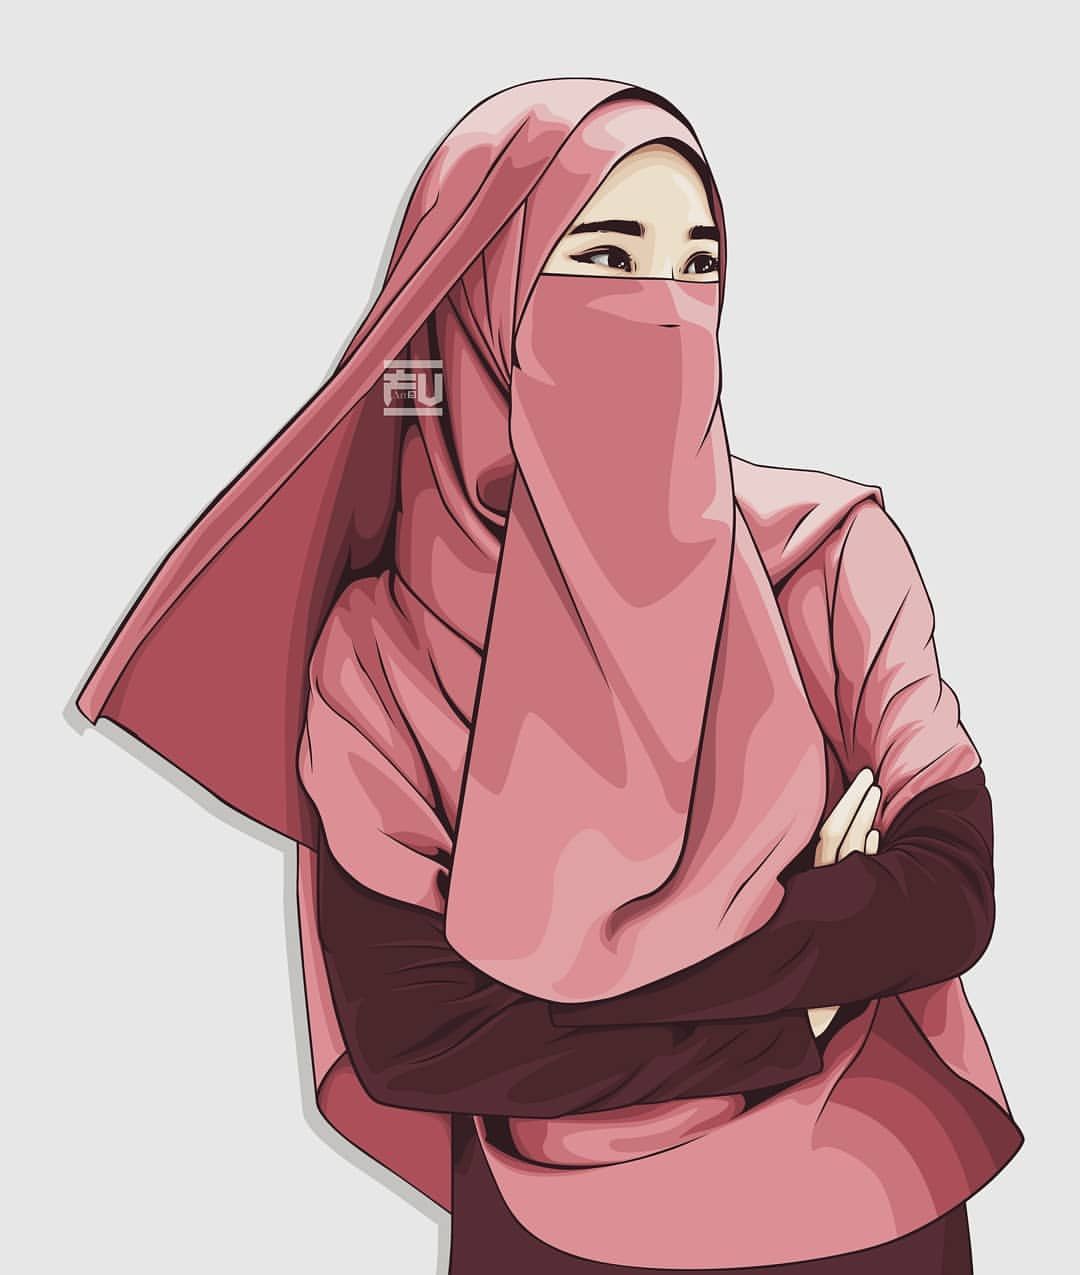 Hijab Cartoon Vector At Collection Of Hijab Cartoon Vector Free For Personal Use